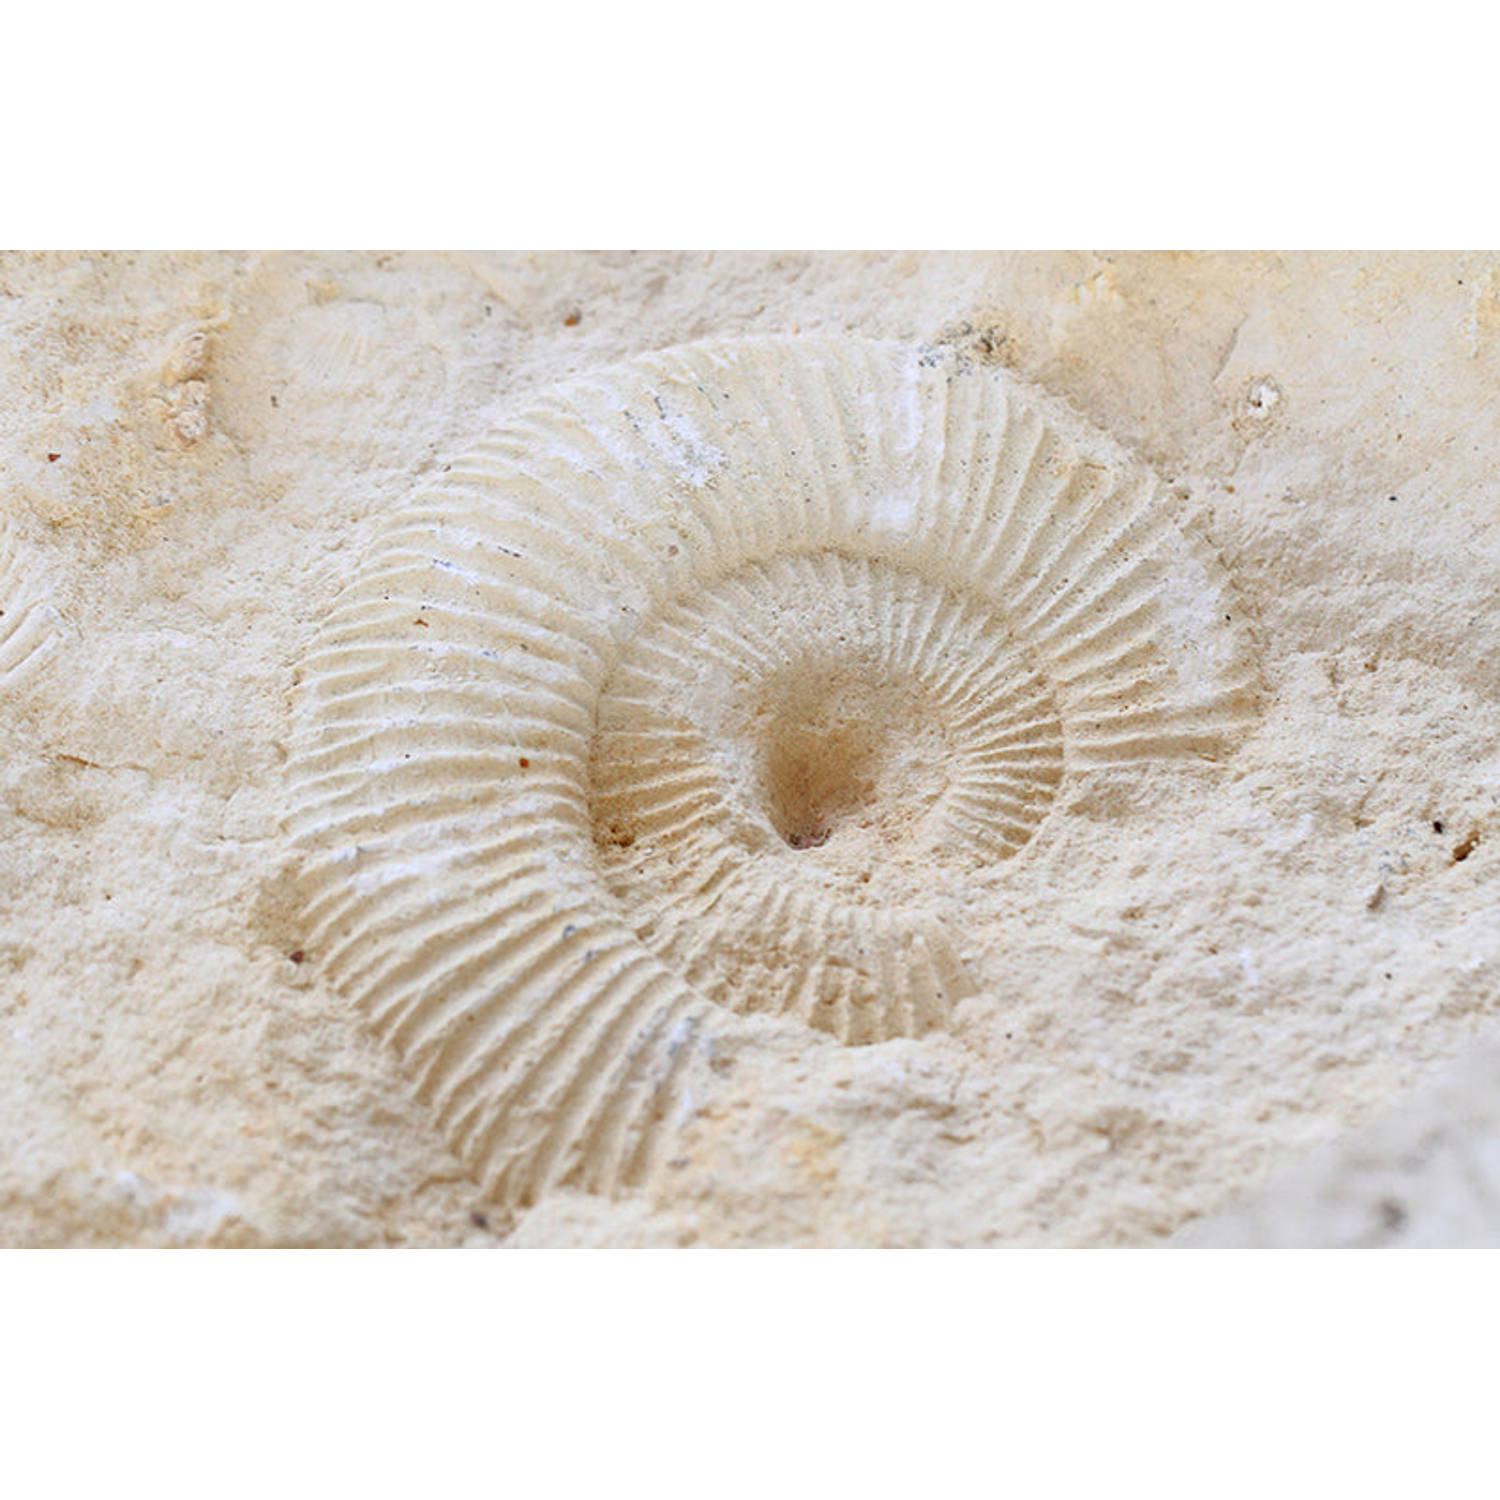 Inductiebeschermer - Ammonites Fossil - 70x50 cm - Inductiebeschermer - Inductie Afdekplaat Kookplaat - Inductie Mat - Anti-Slip - Keuken Decoratie - Keuken Accessoires